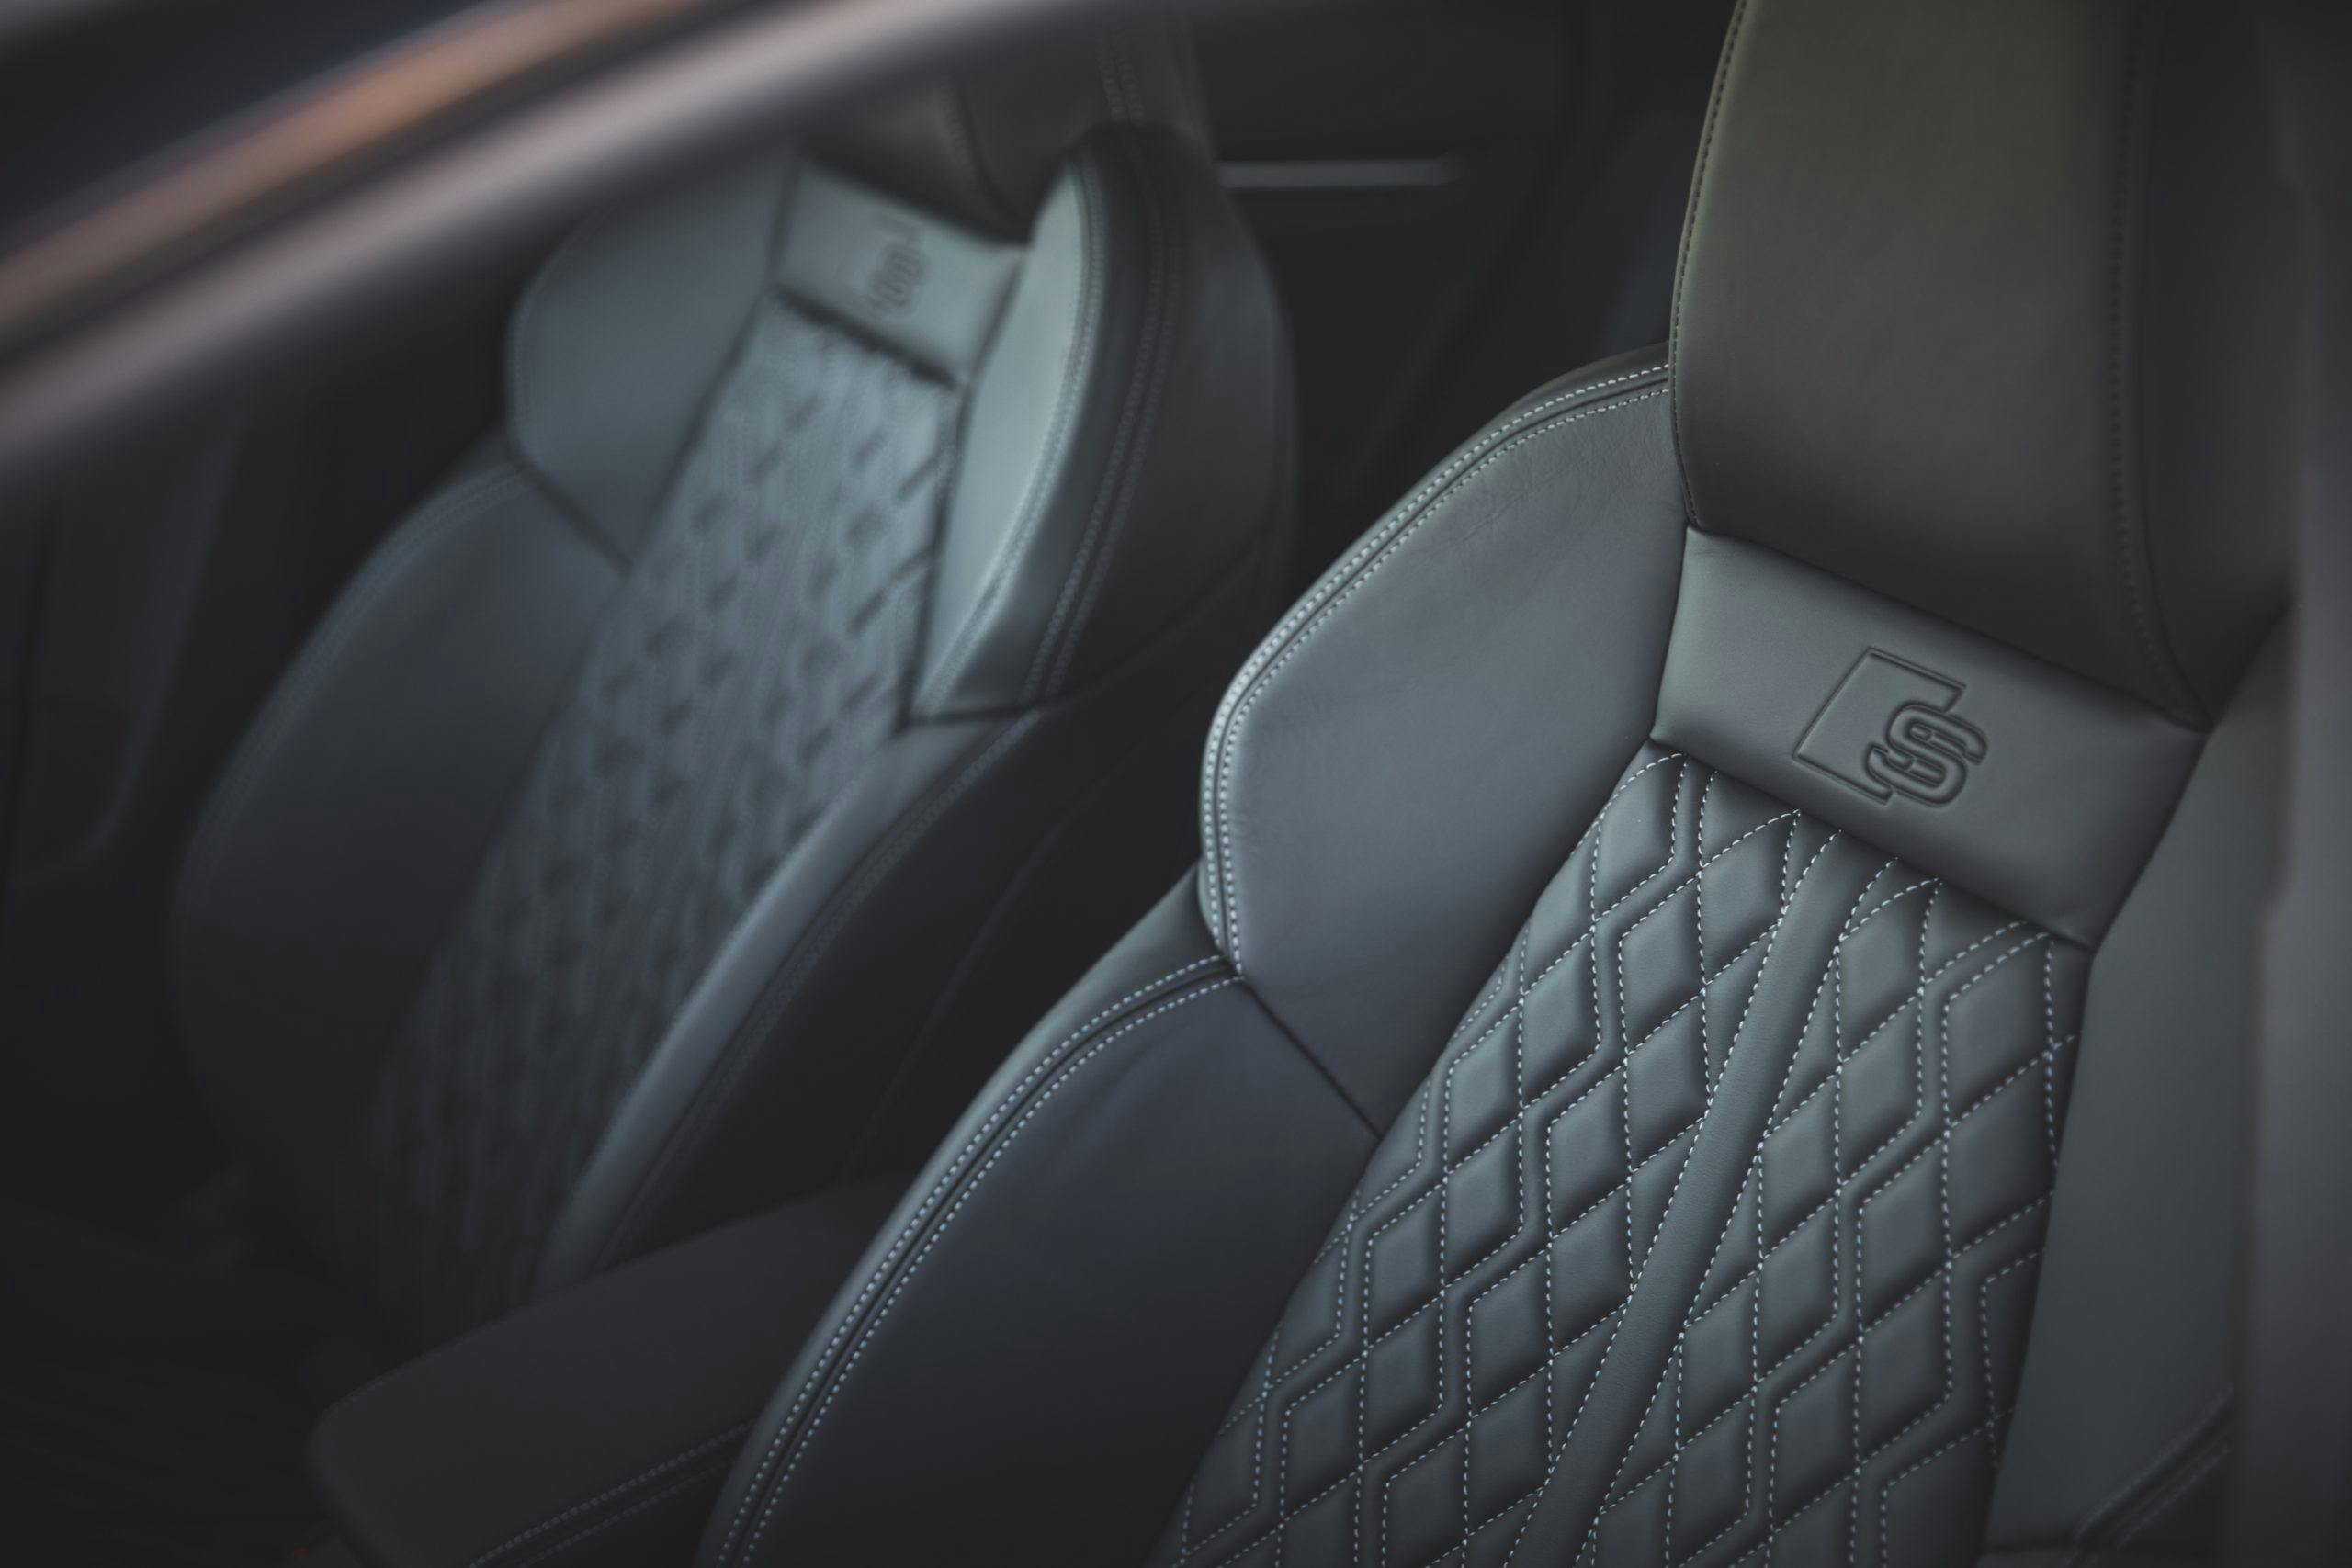 2022 Audi S3 interior leather seat closeup